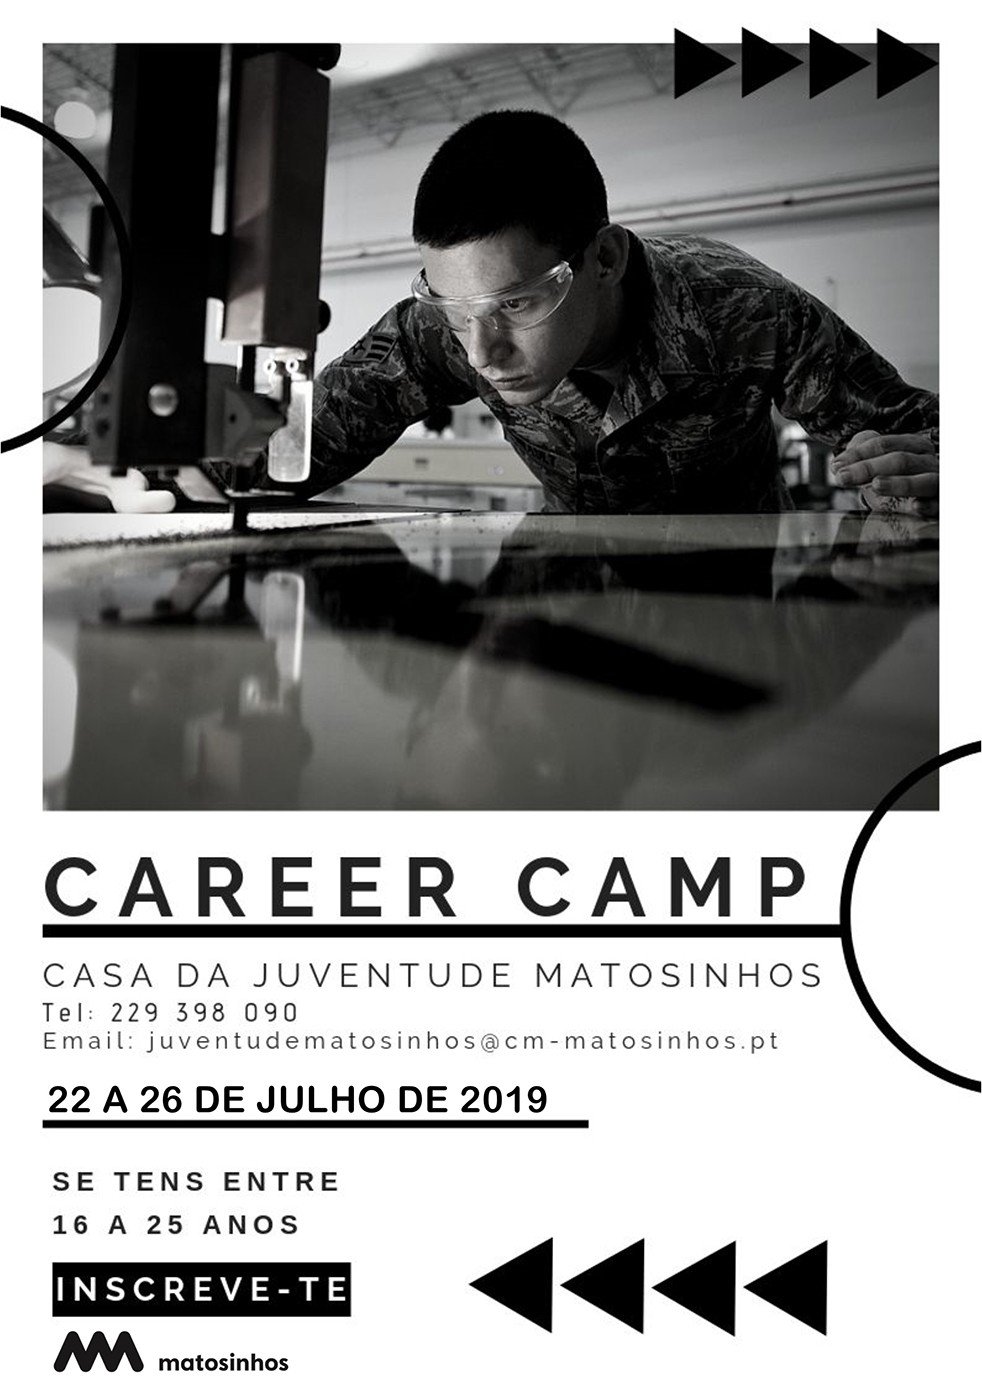 Career Camp